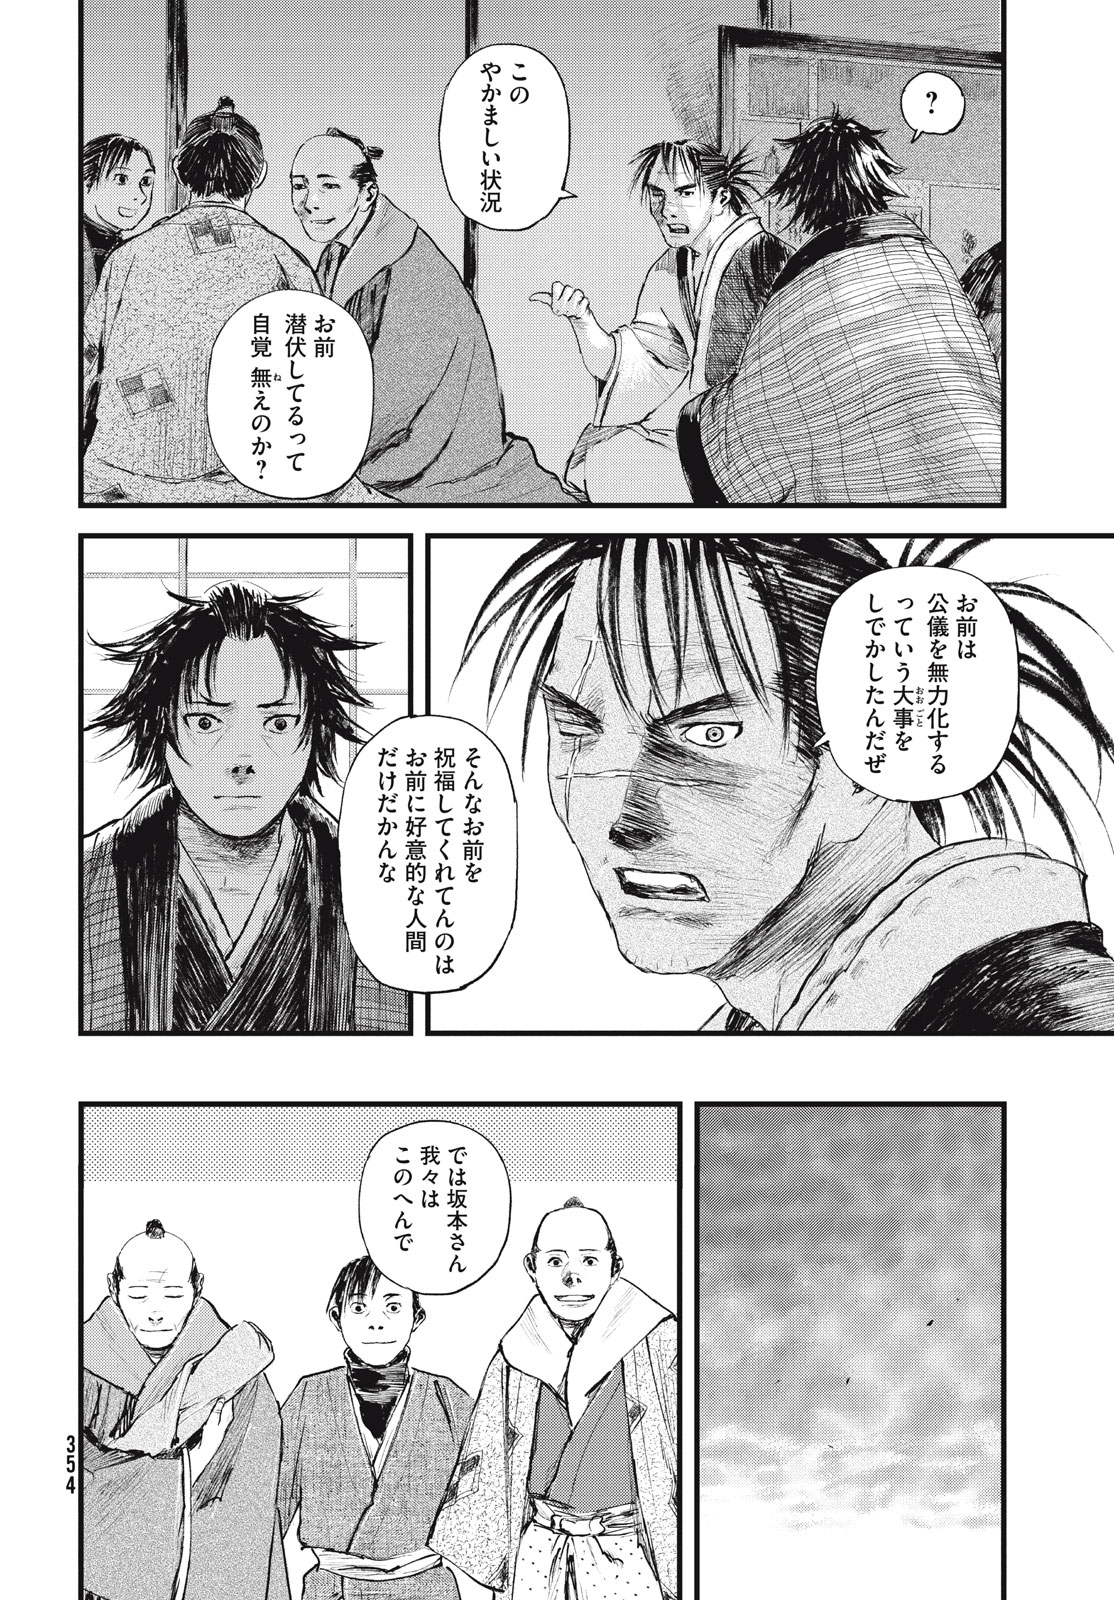 Blade of the Immortal: Bakumatsu Arc - Chapter 54 - Page 8